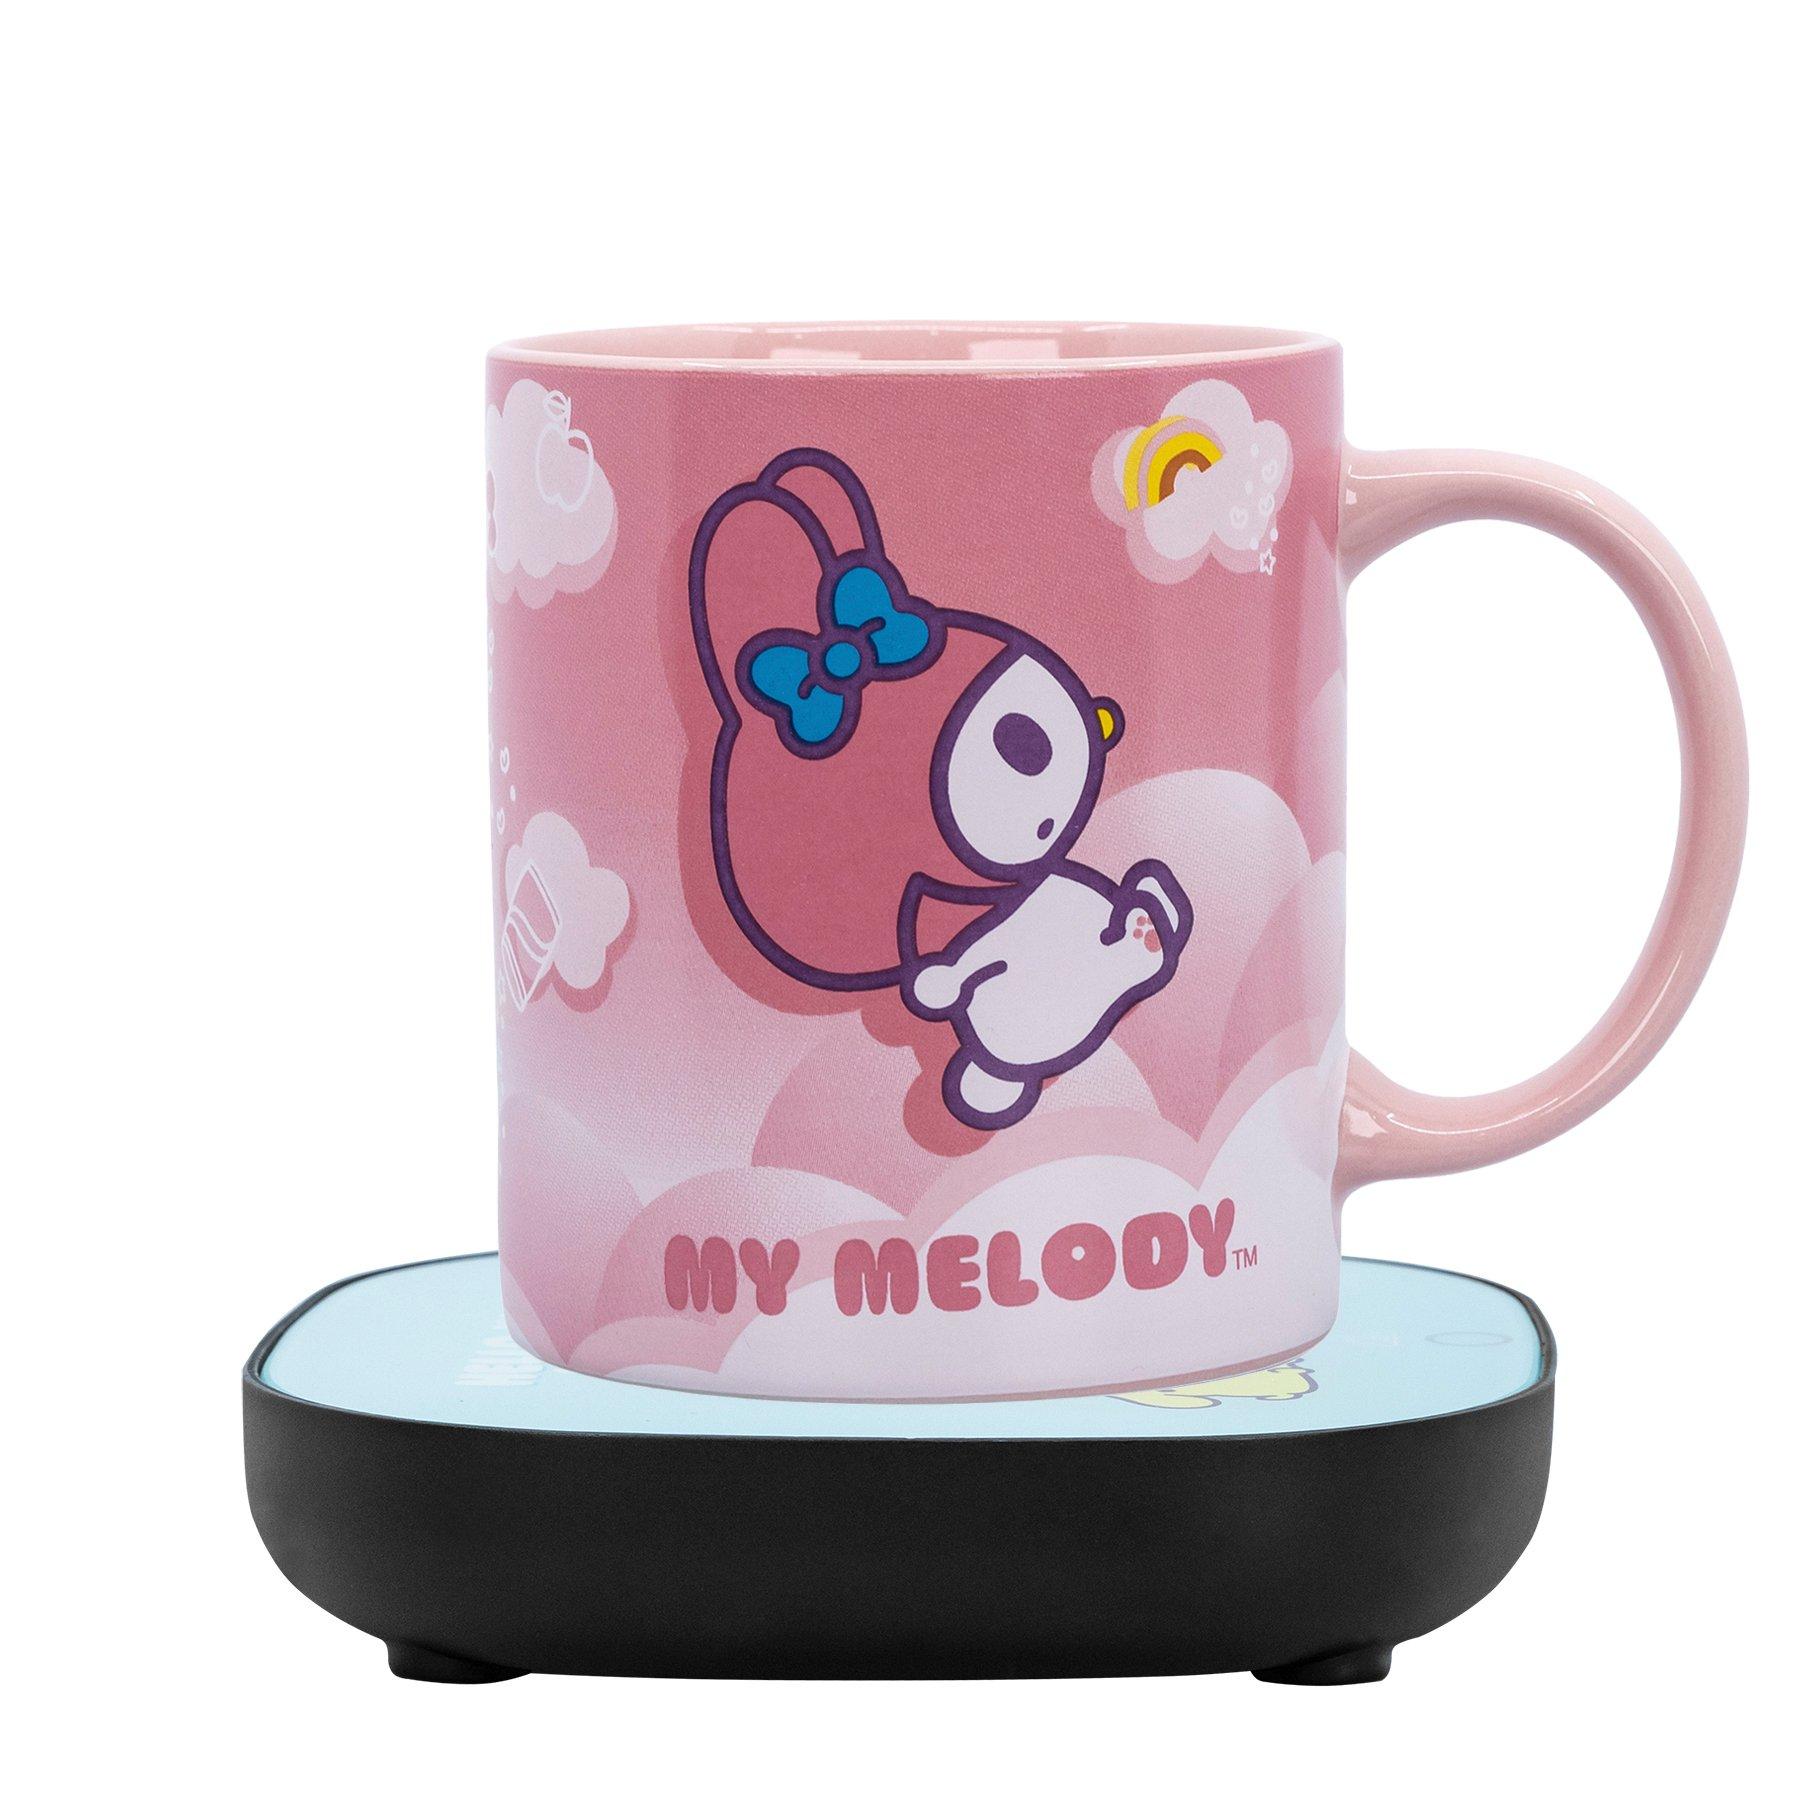 https://media.gamestop.com/i/gamestop/20005614_ALT02/Hello-Kitty-and-Friends-My-Melody-Mug-Warmer-with-Mug-..?$pdp$